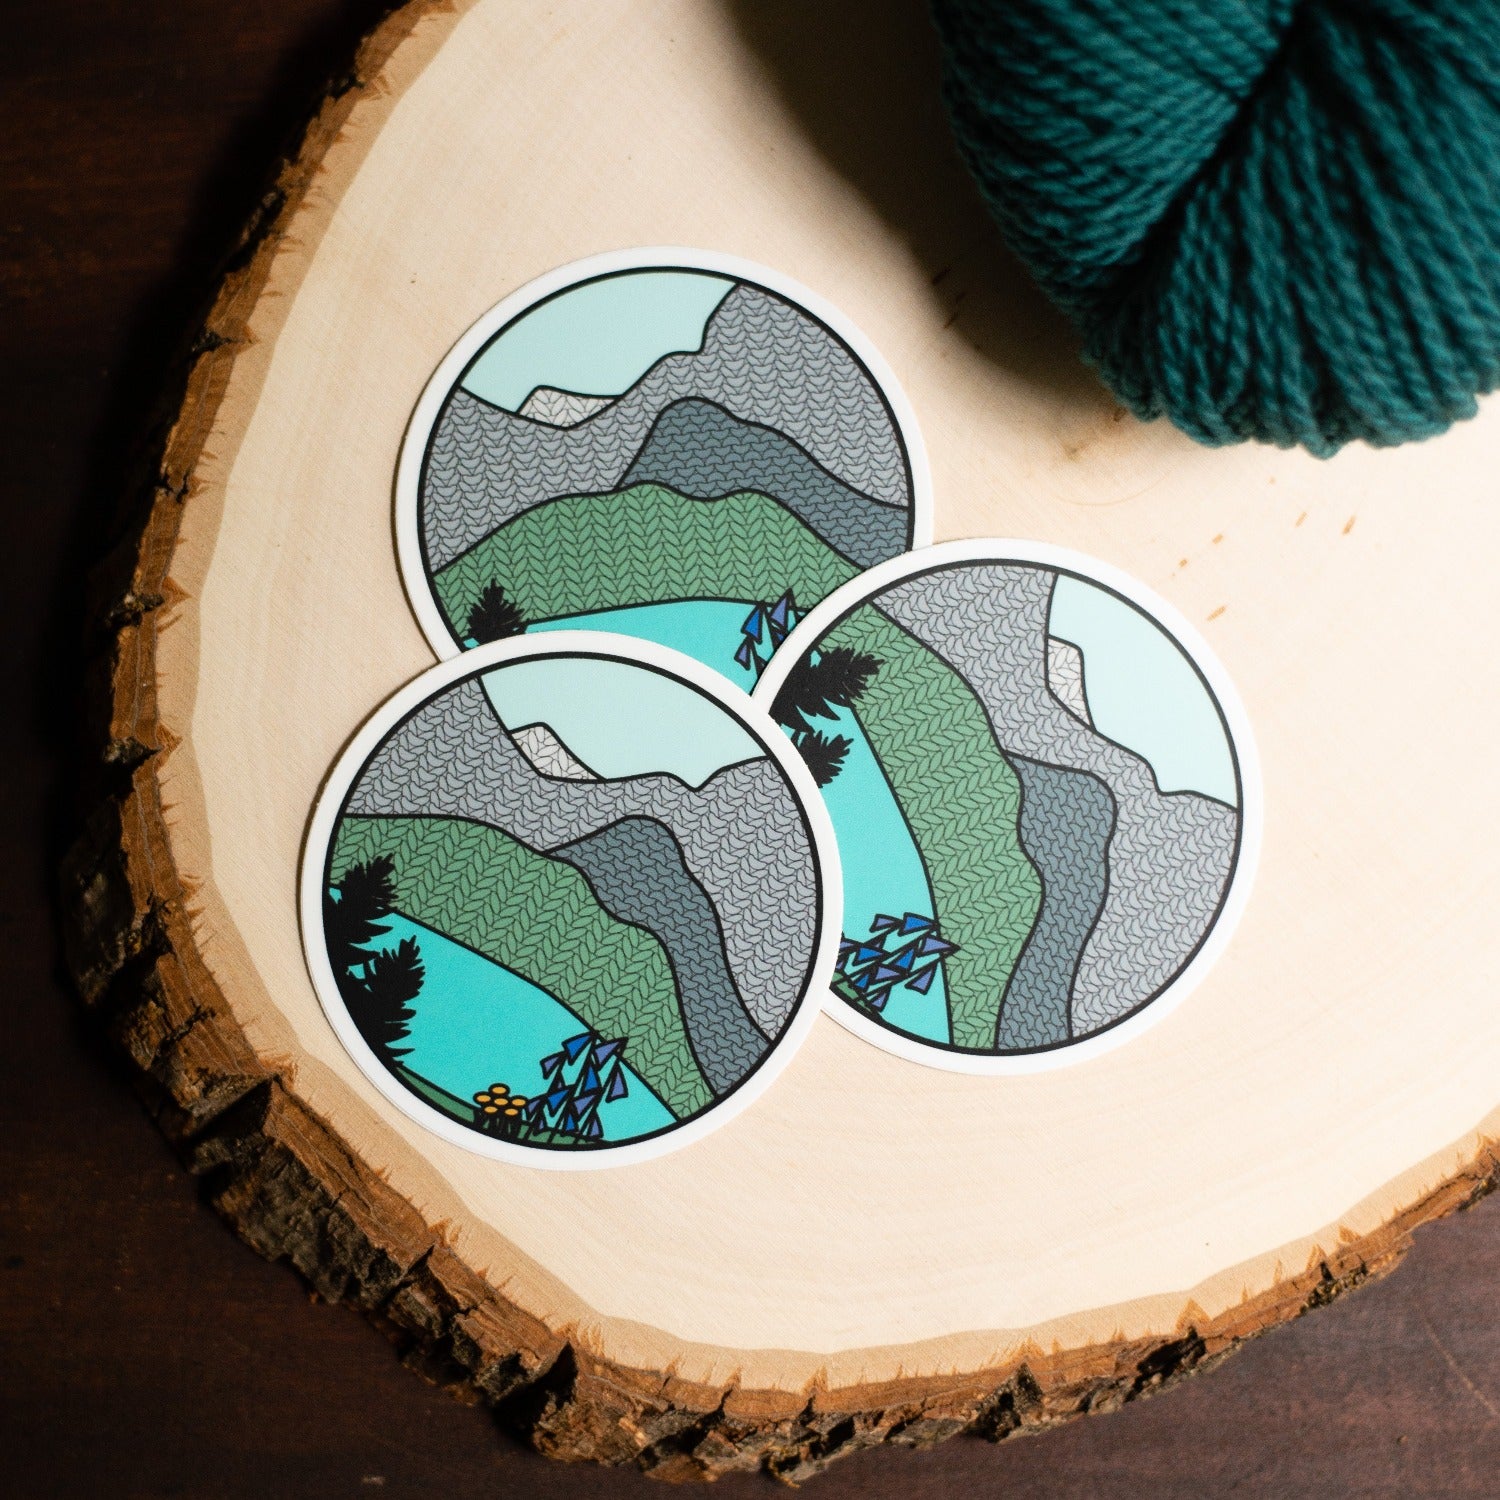 Glacier Knitional Park - National Park Knitting Sticker